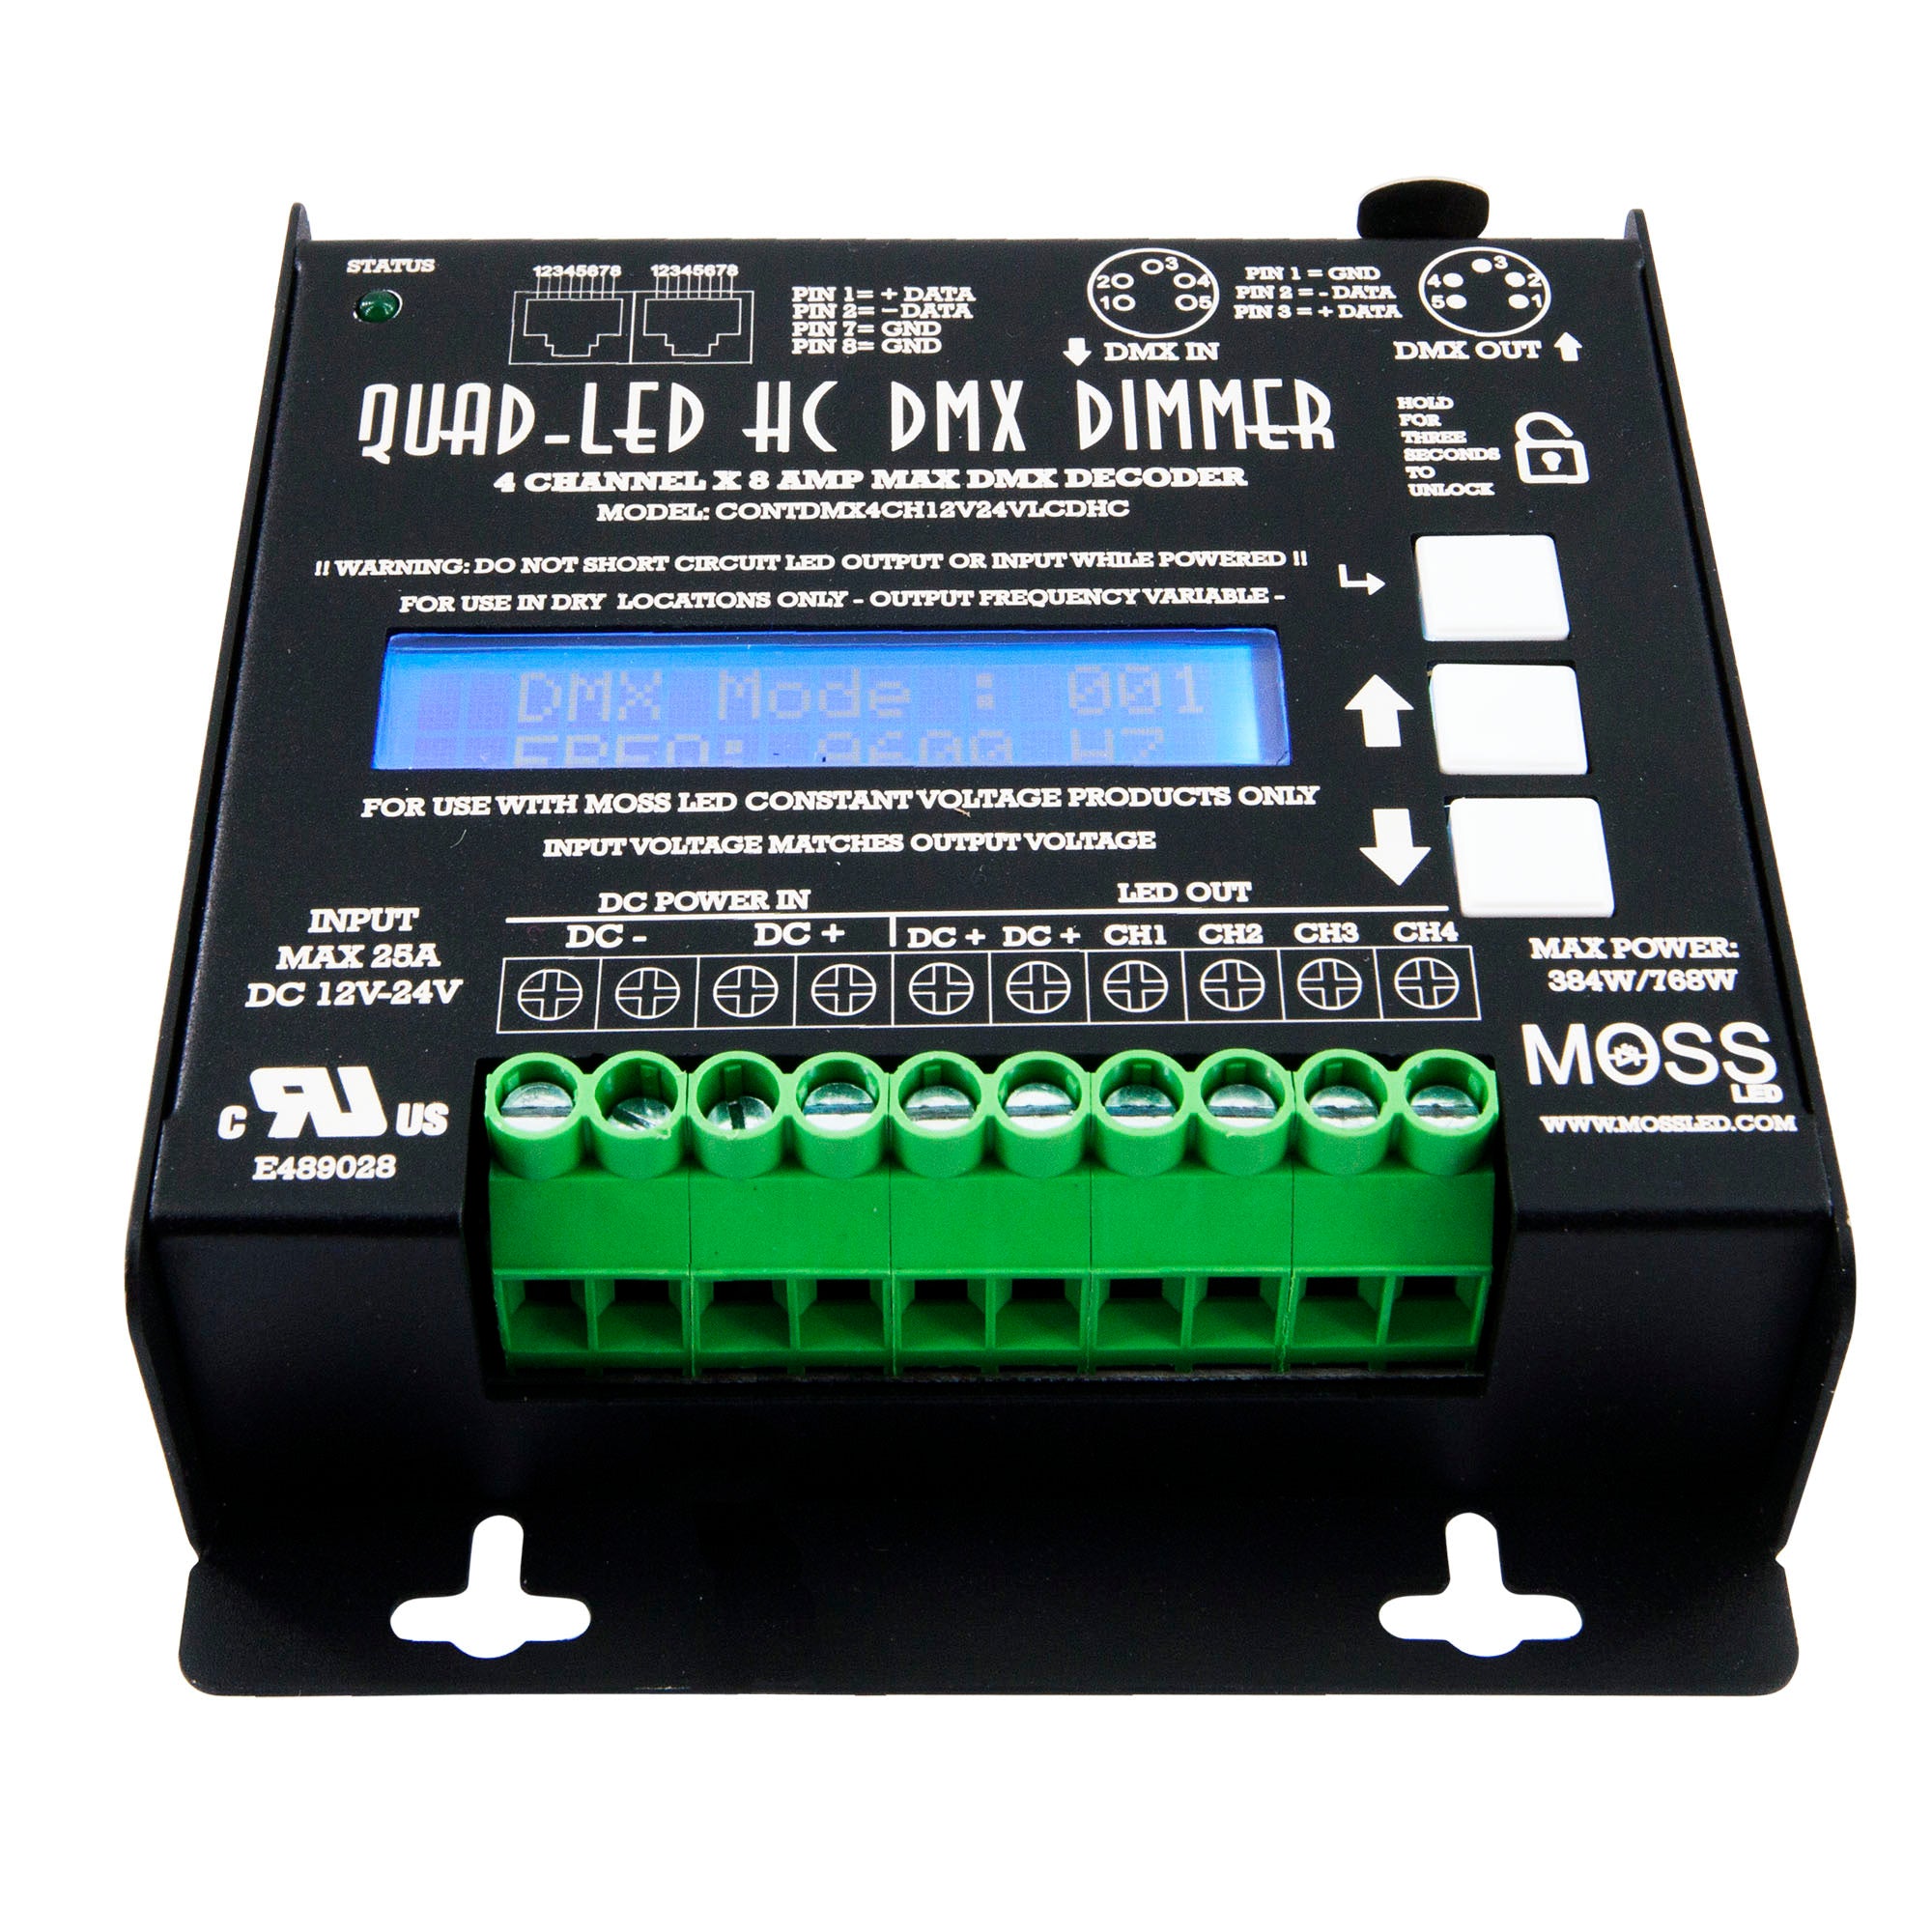 Quad-LED High Current DMX - 4 Channel Dimmer